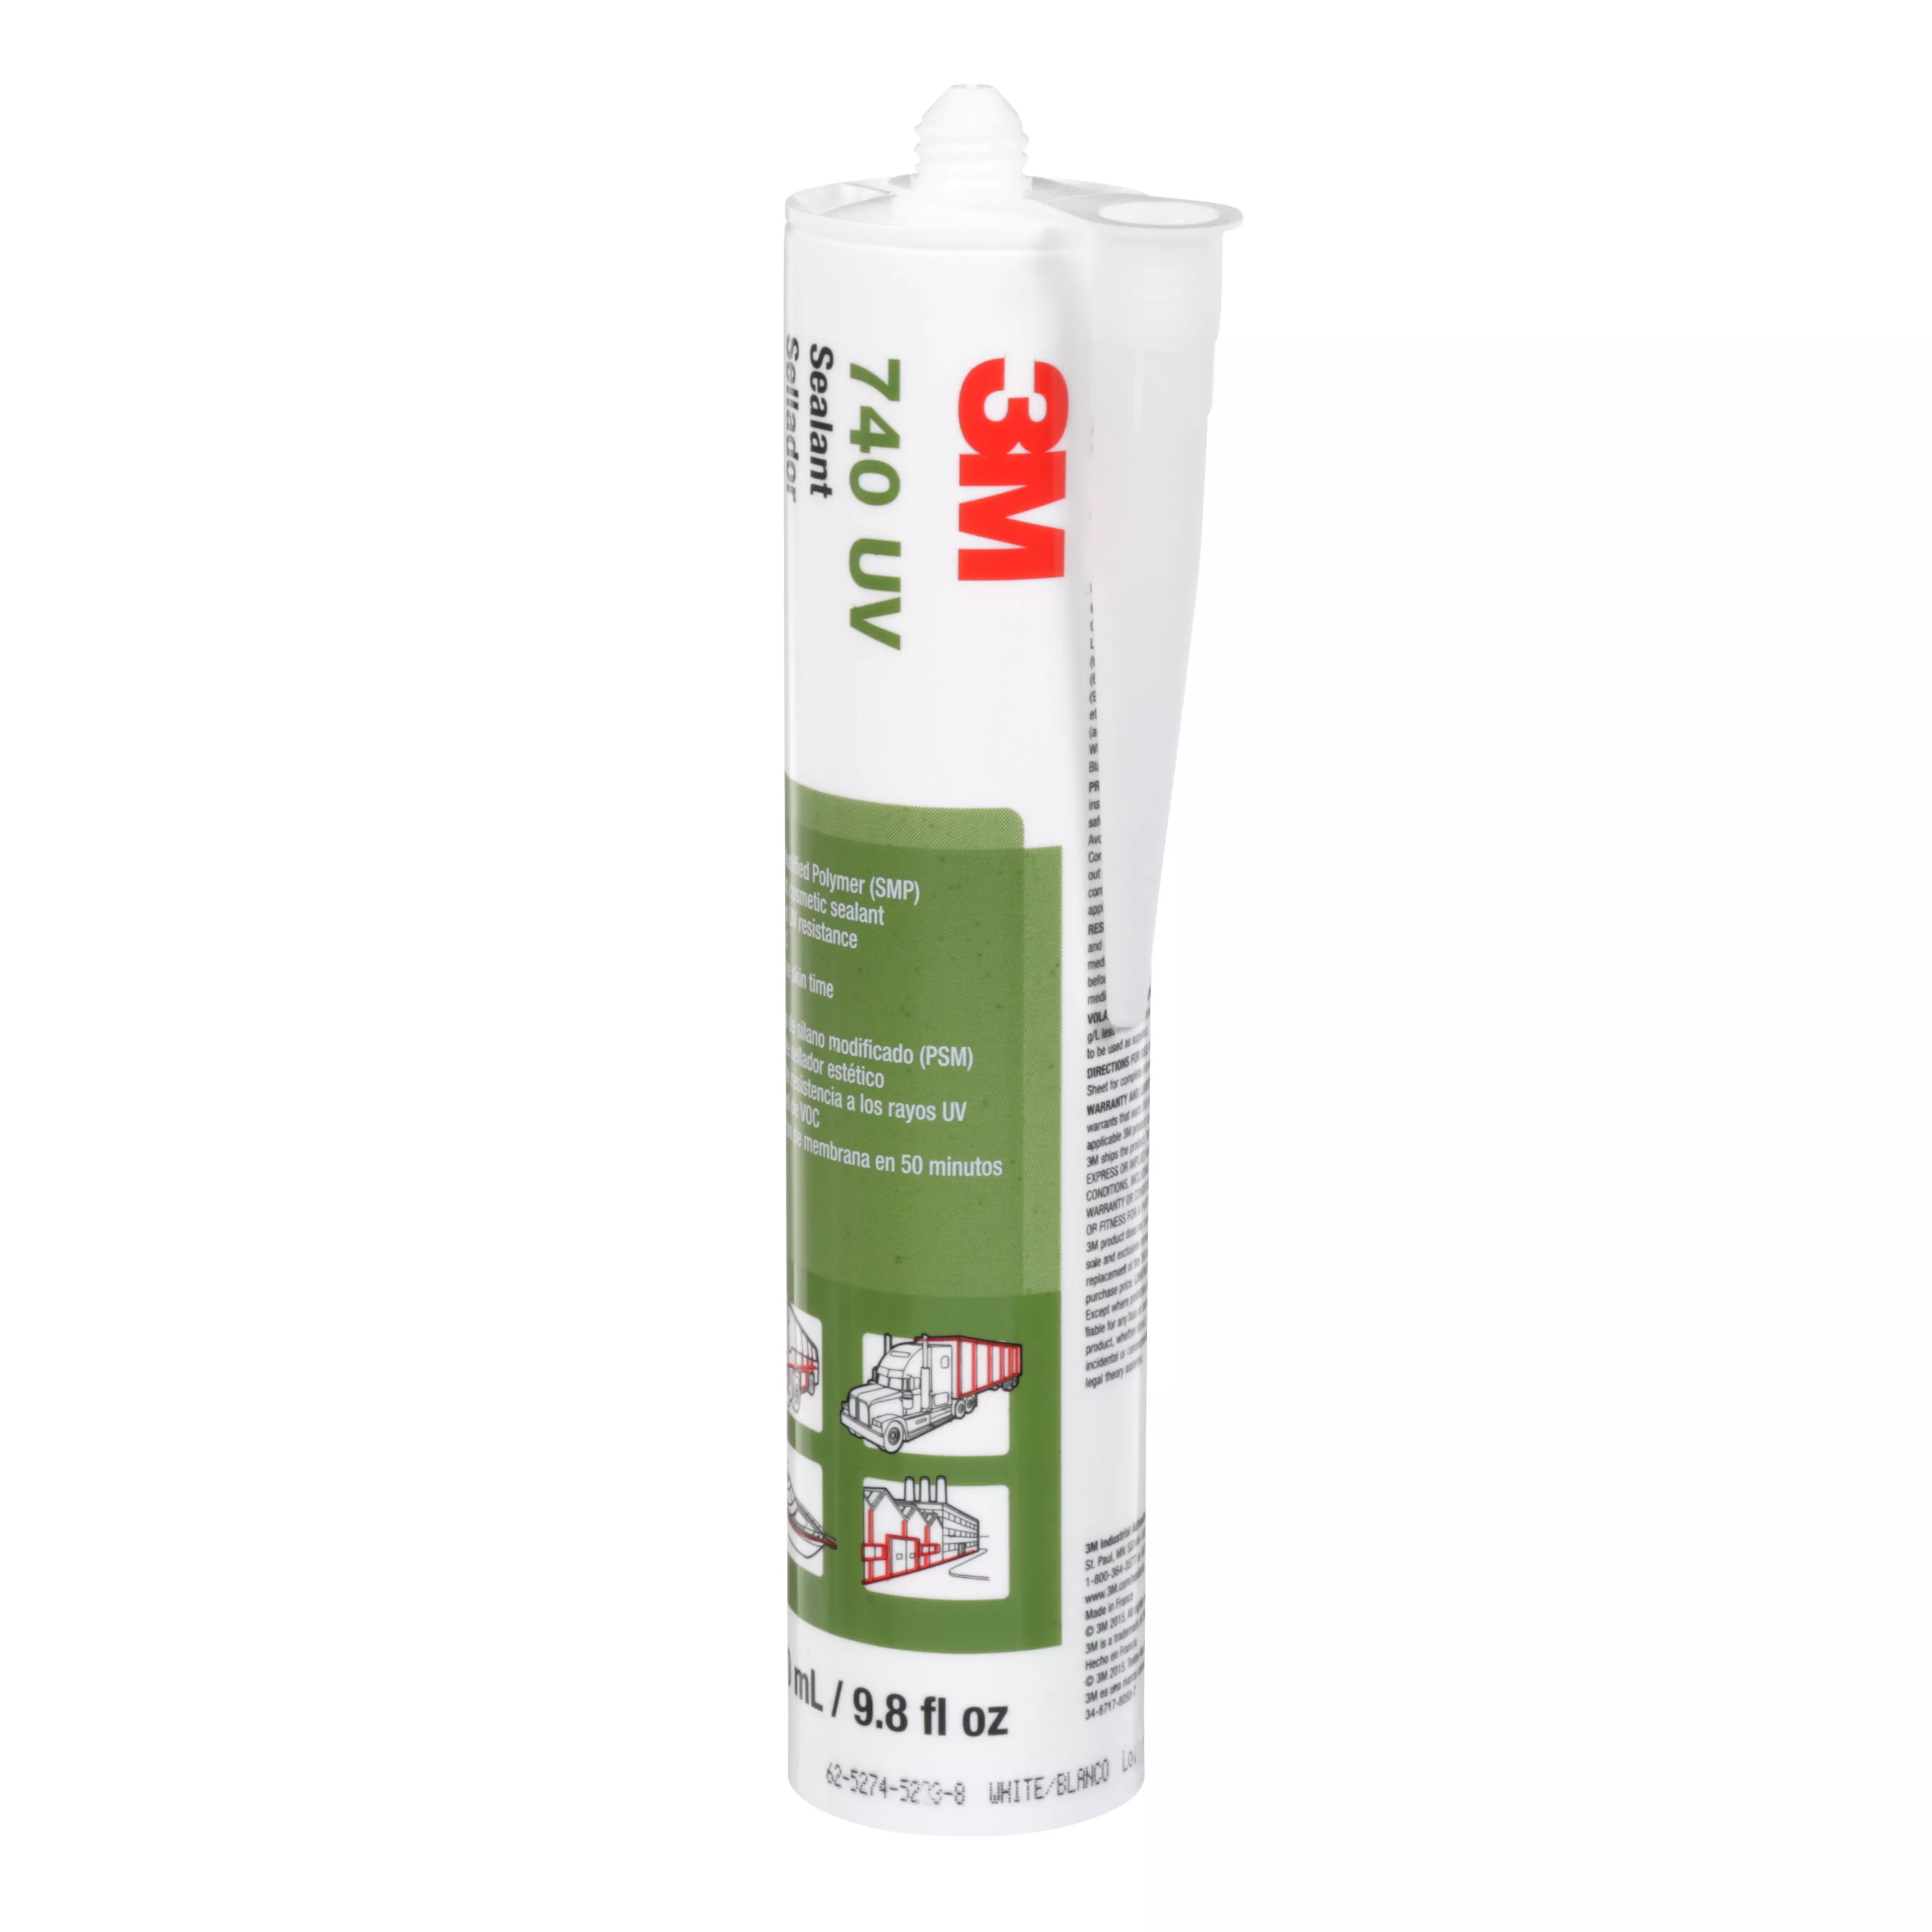 SKU 7100116448 | 3M™ Adhesive Sealant 740 UV